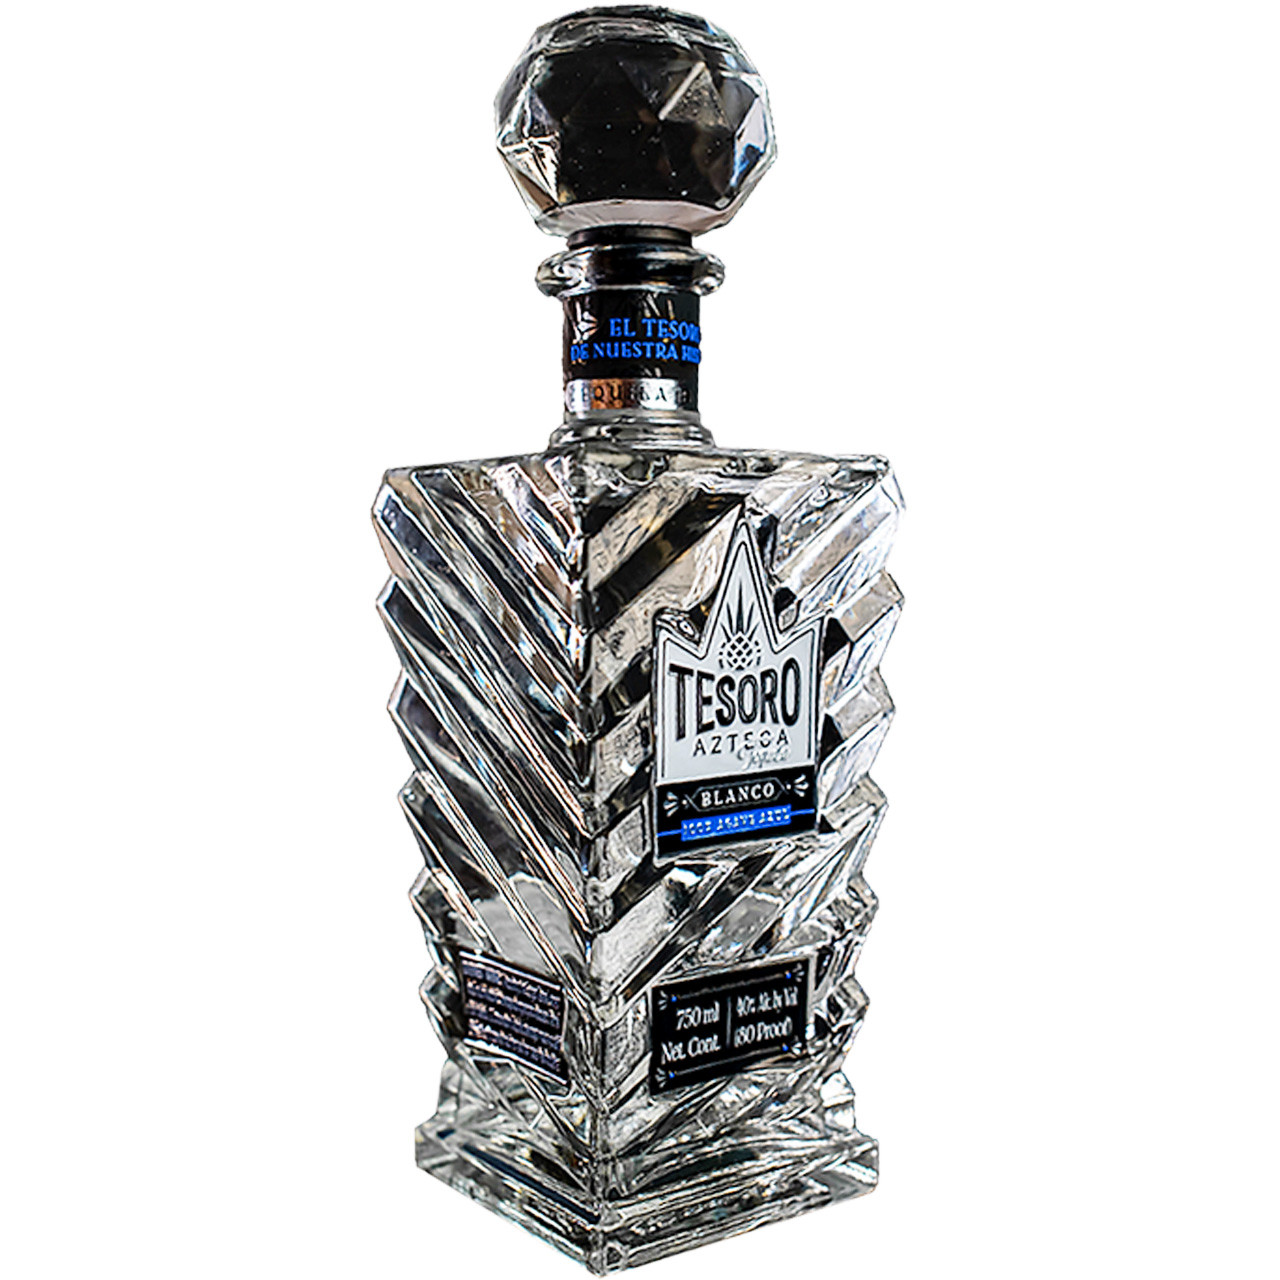 Tesoro Azteca Blanco 750mL Tequila